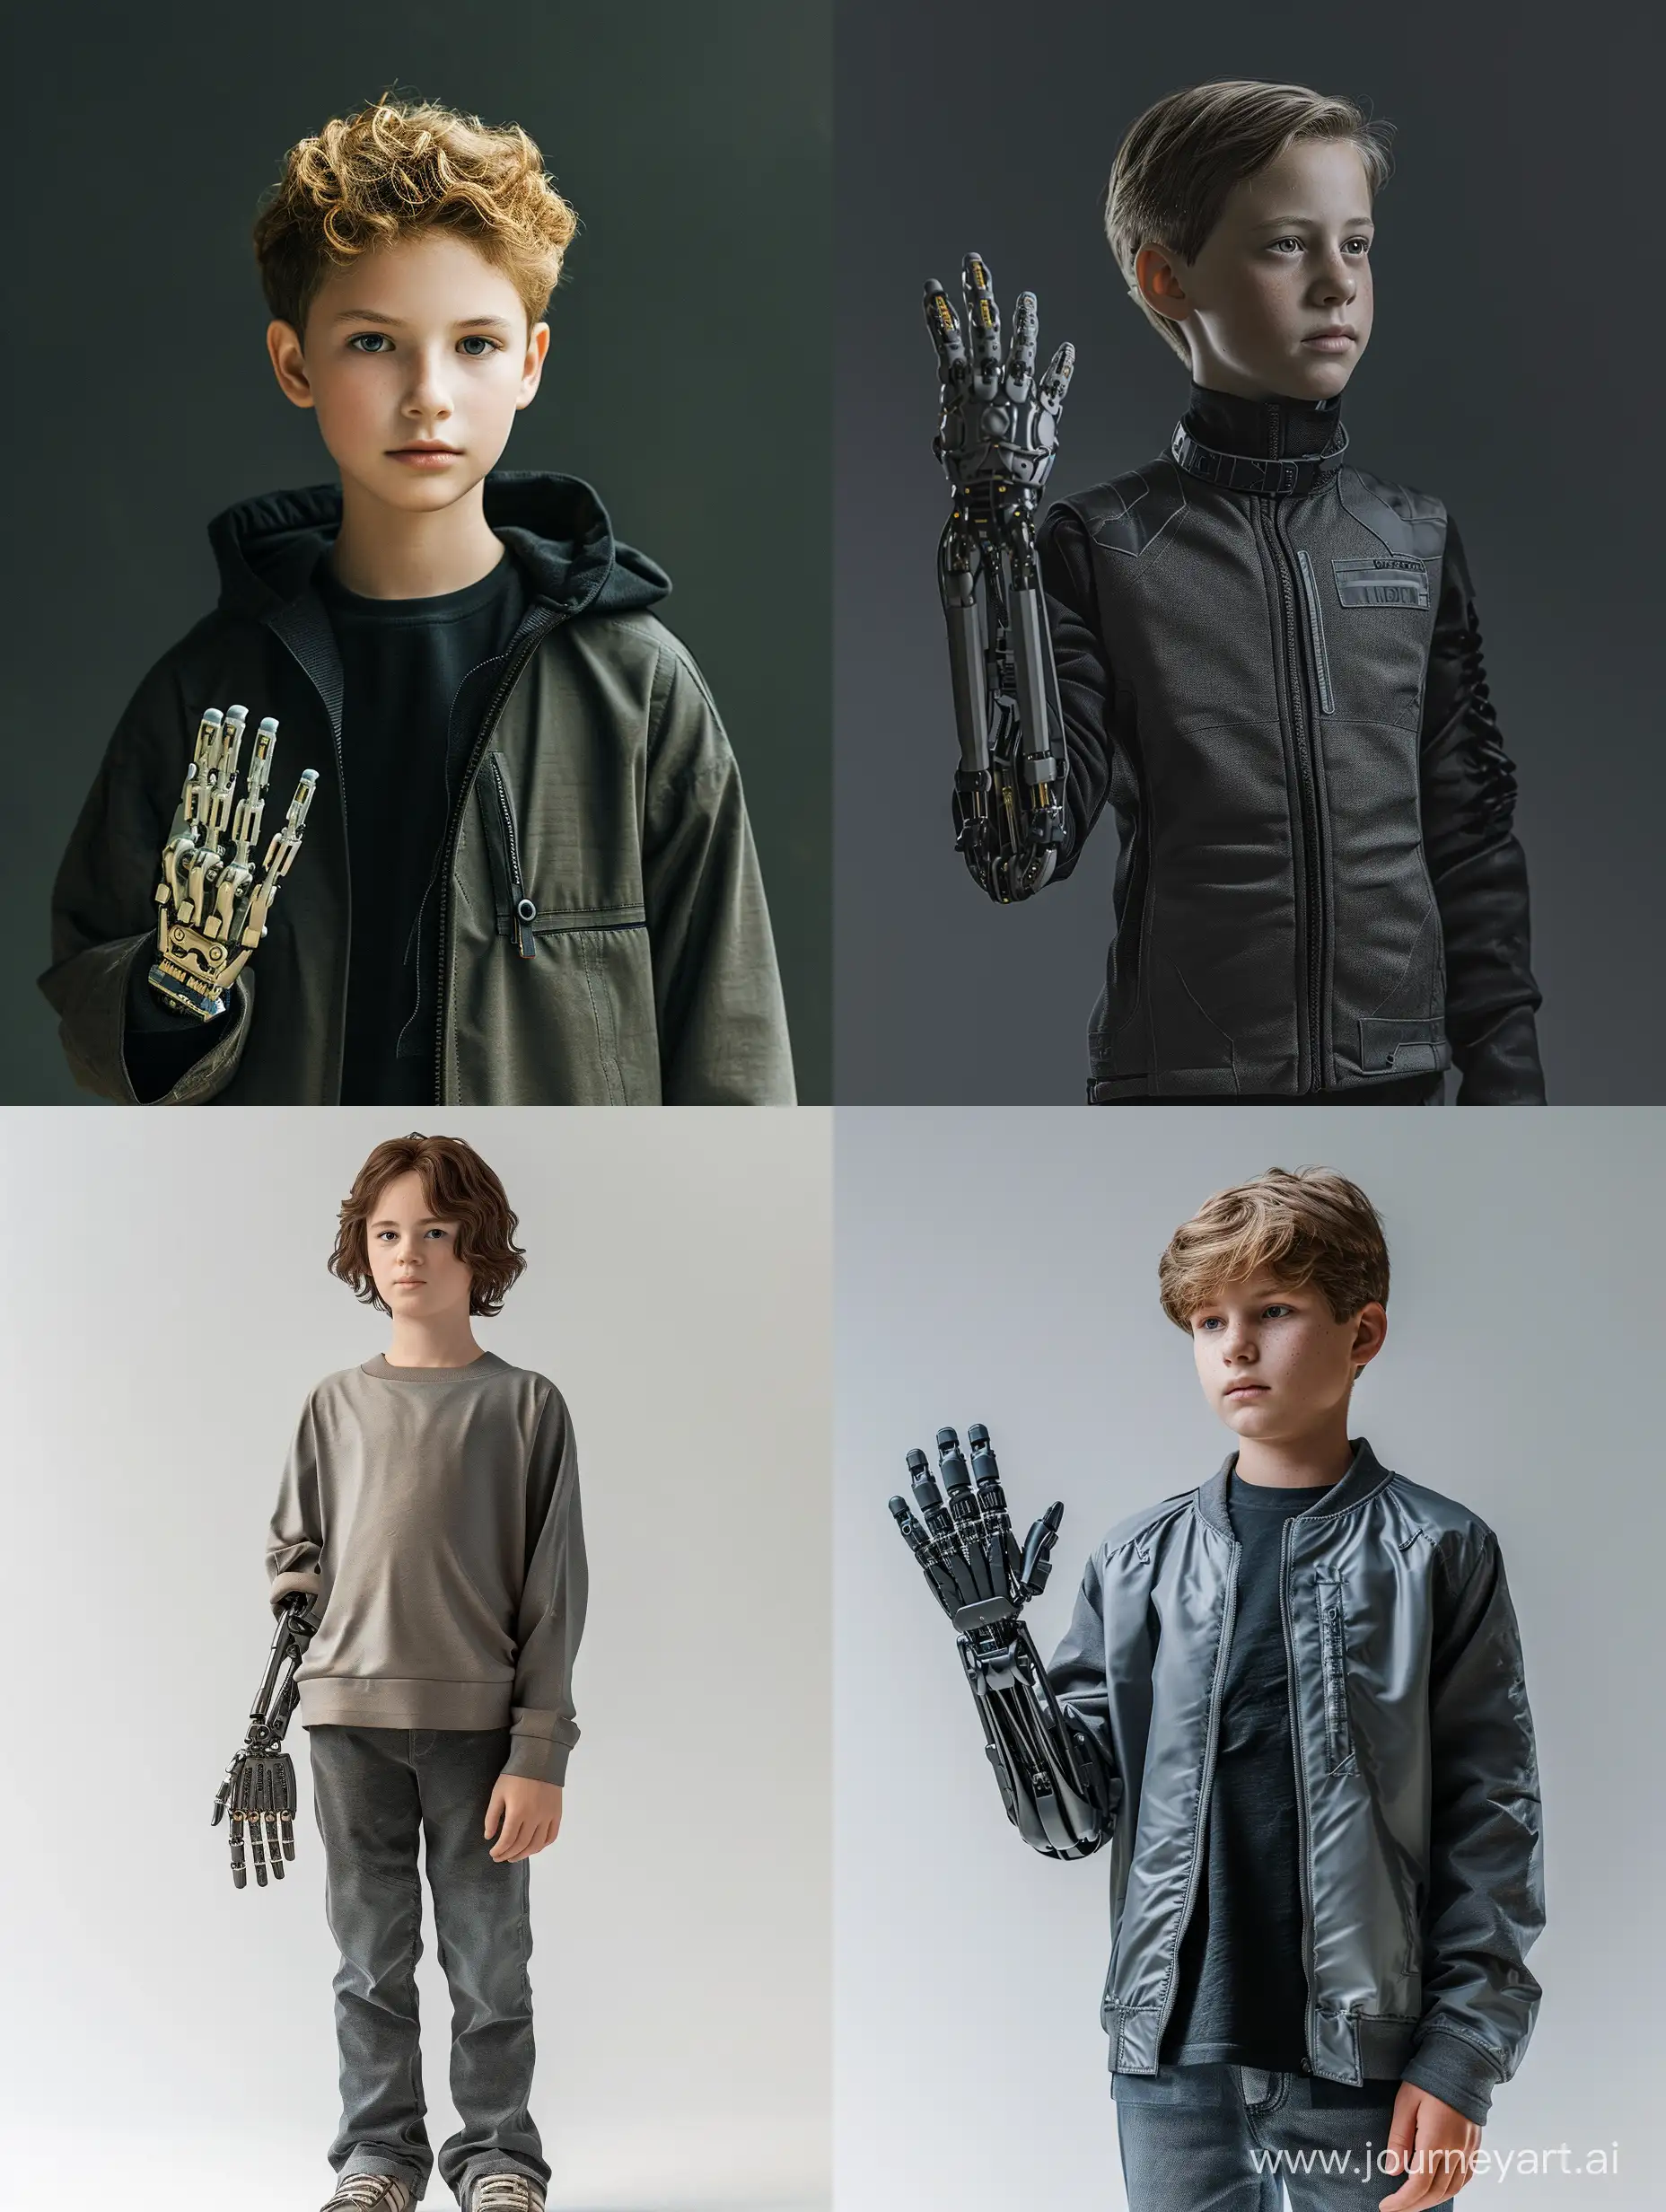 UltraRealistic-Teenage-Boy-Showcasing-Modern-Bionic-Left-Hand-in-HighTech-32K-UHD-Photography